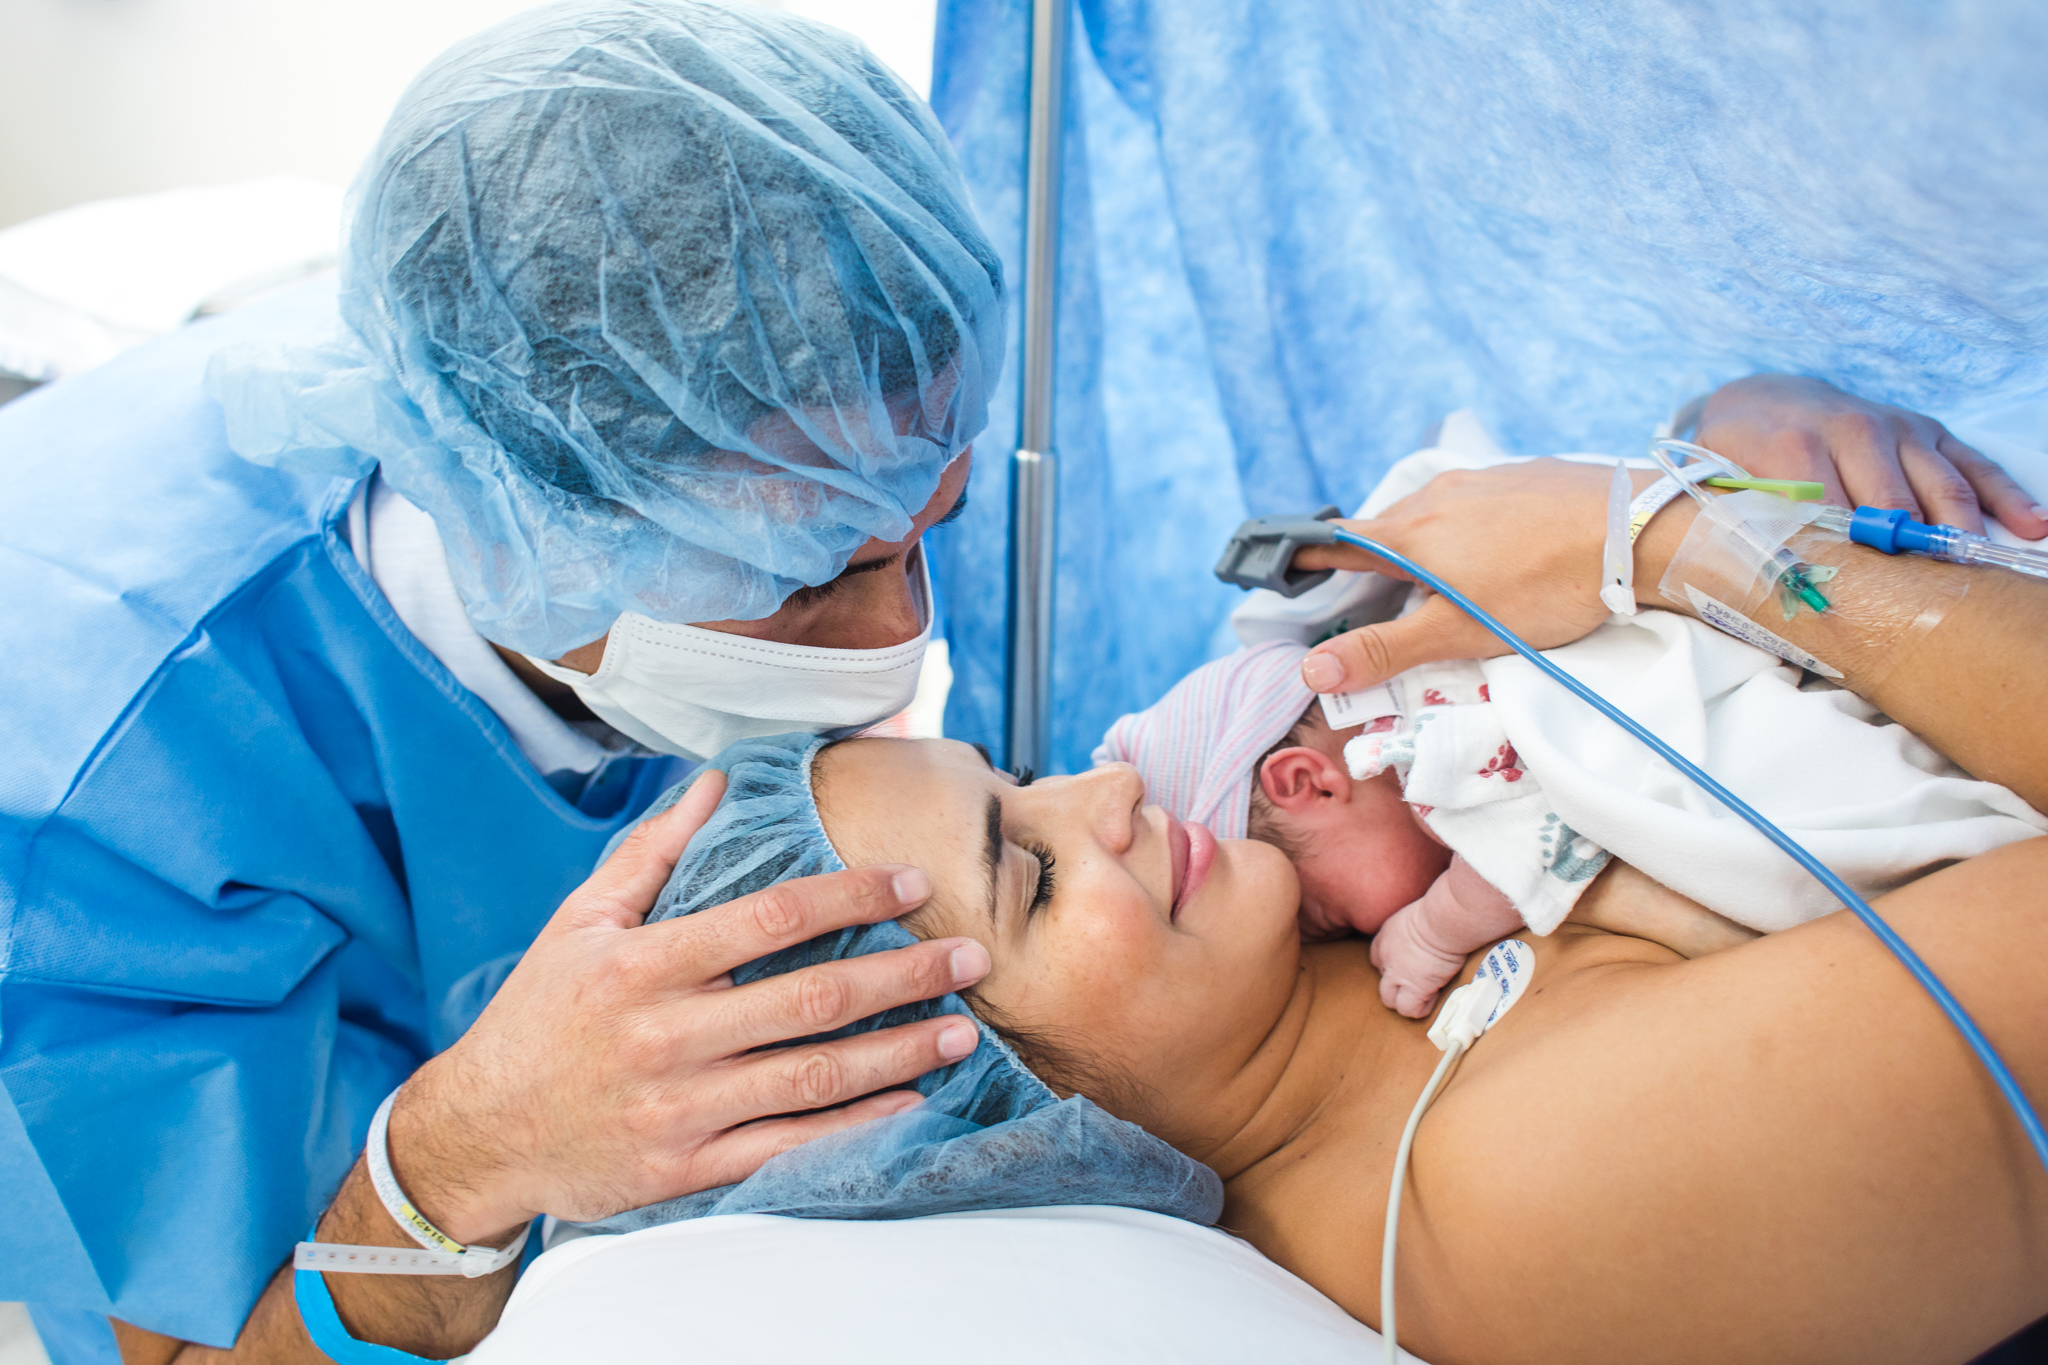 breastfeeding in operating room.jpg